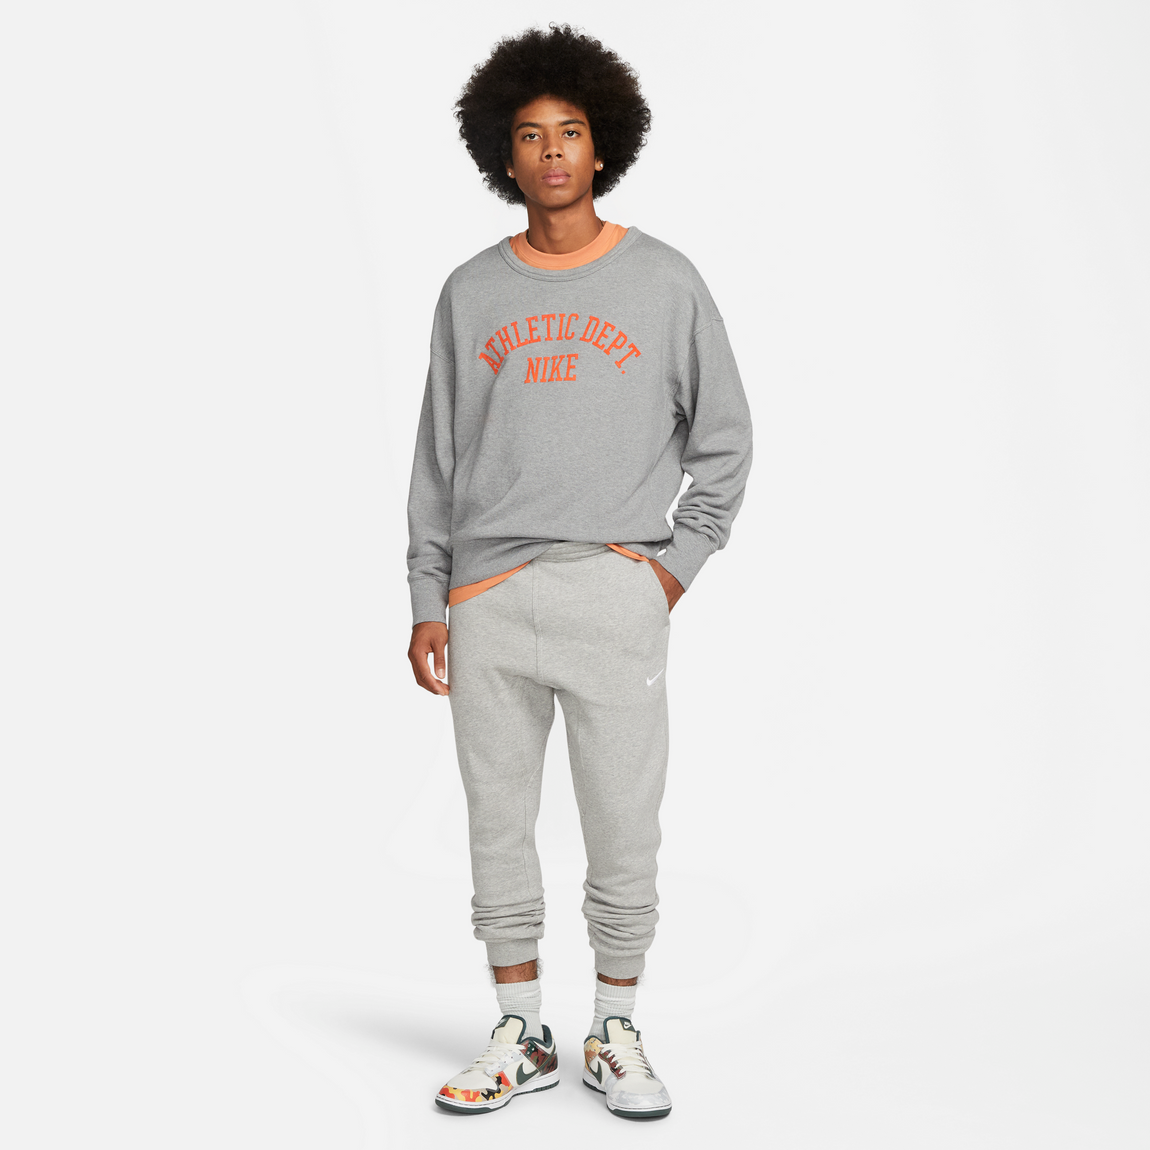 Nike Sportswear Trend Crewneck Sweatshirt (Carbon Heather/Team Orange) - Nike Sportswear Trend Crewneck Sweatshirt (Carbon Heather/Team Orange) - 